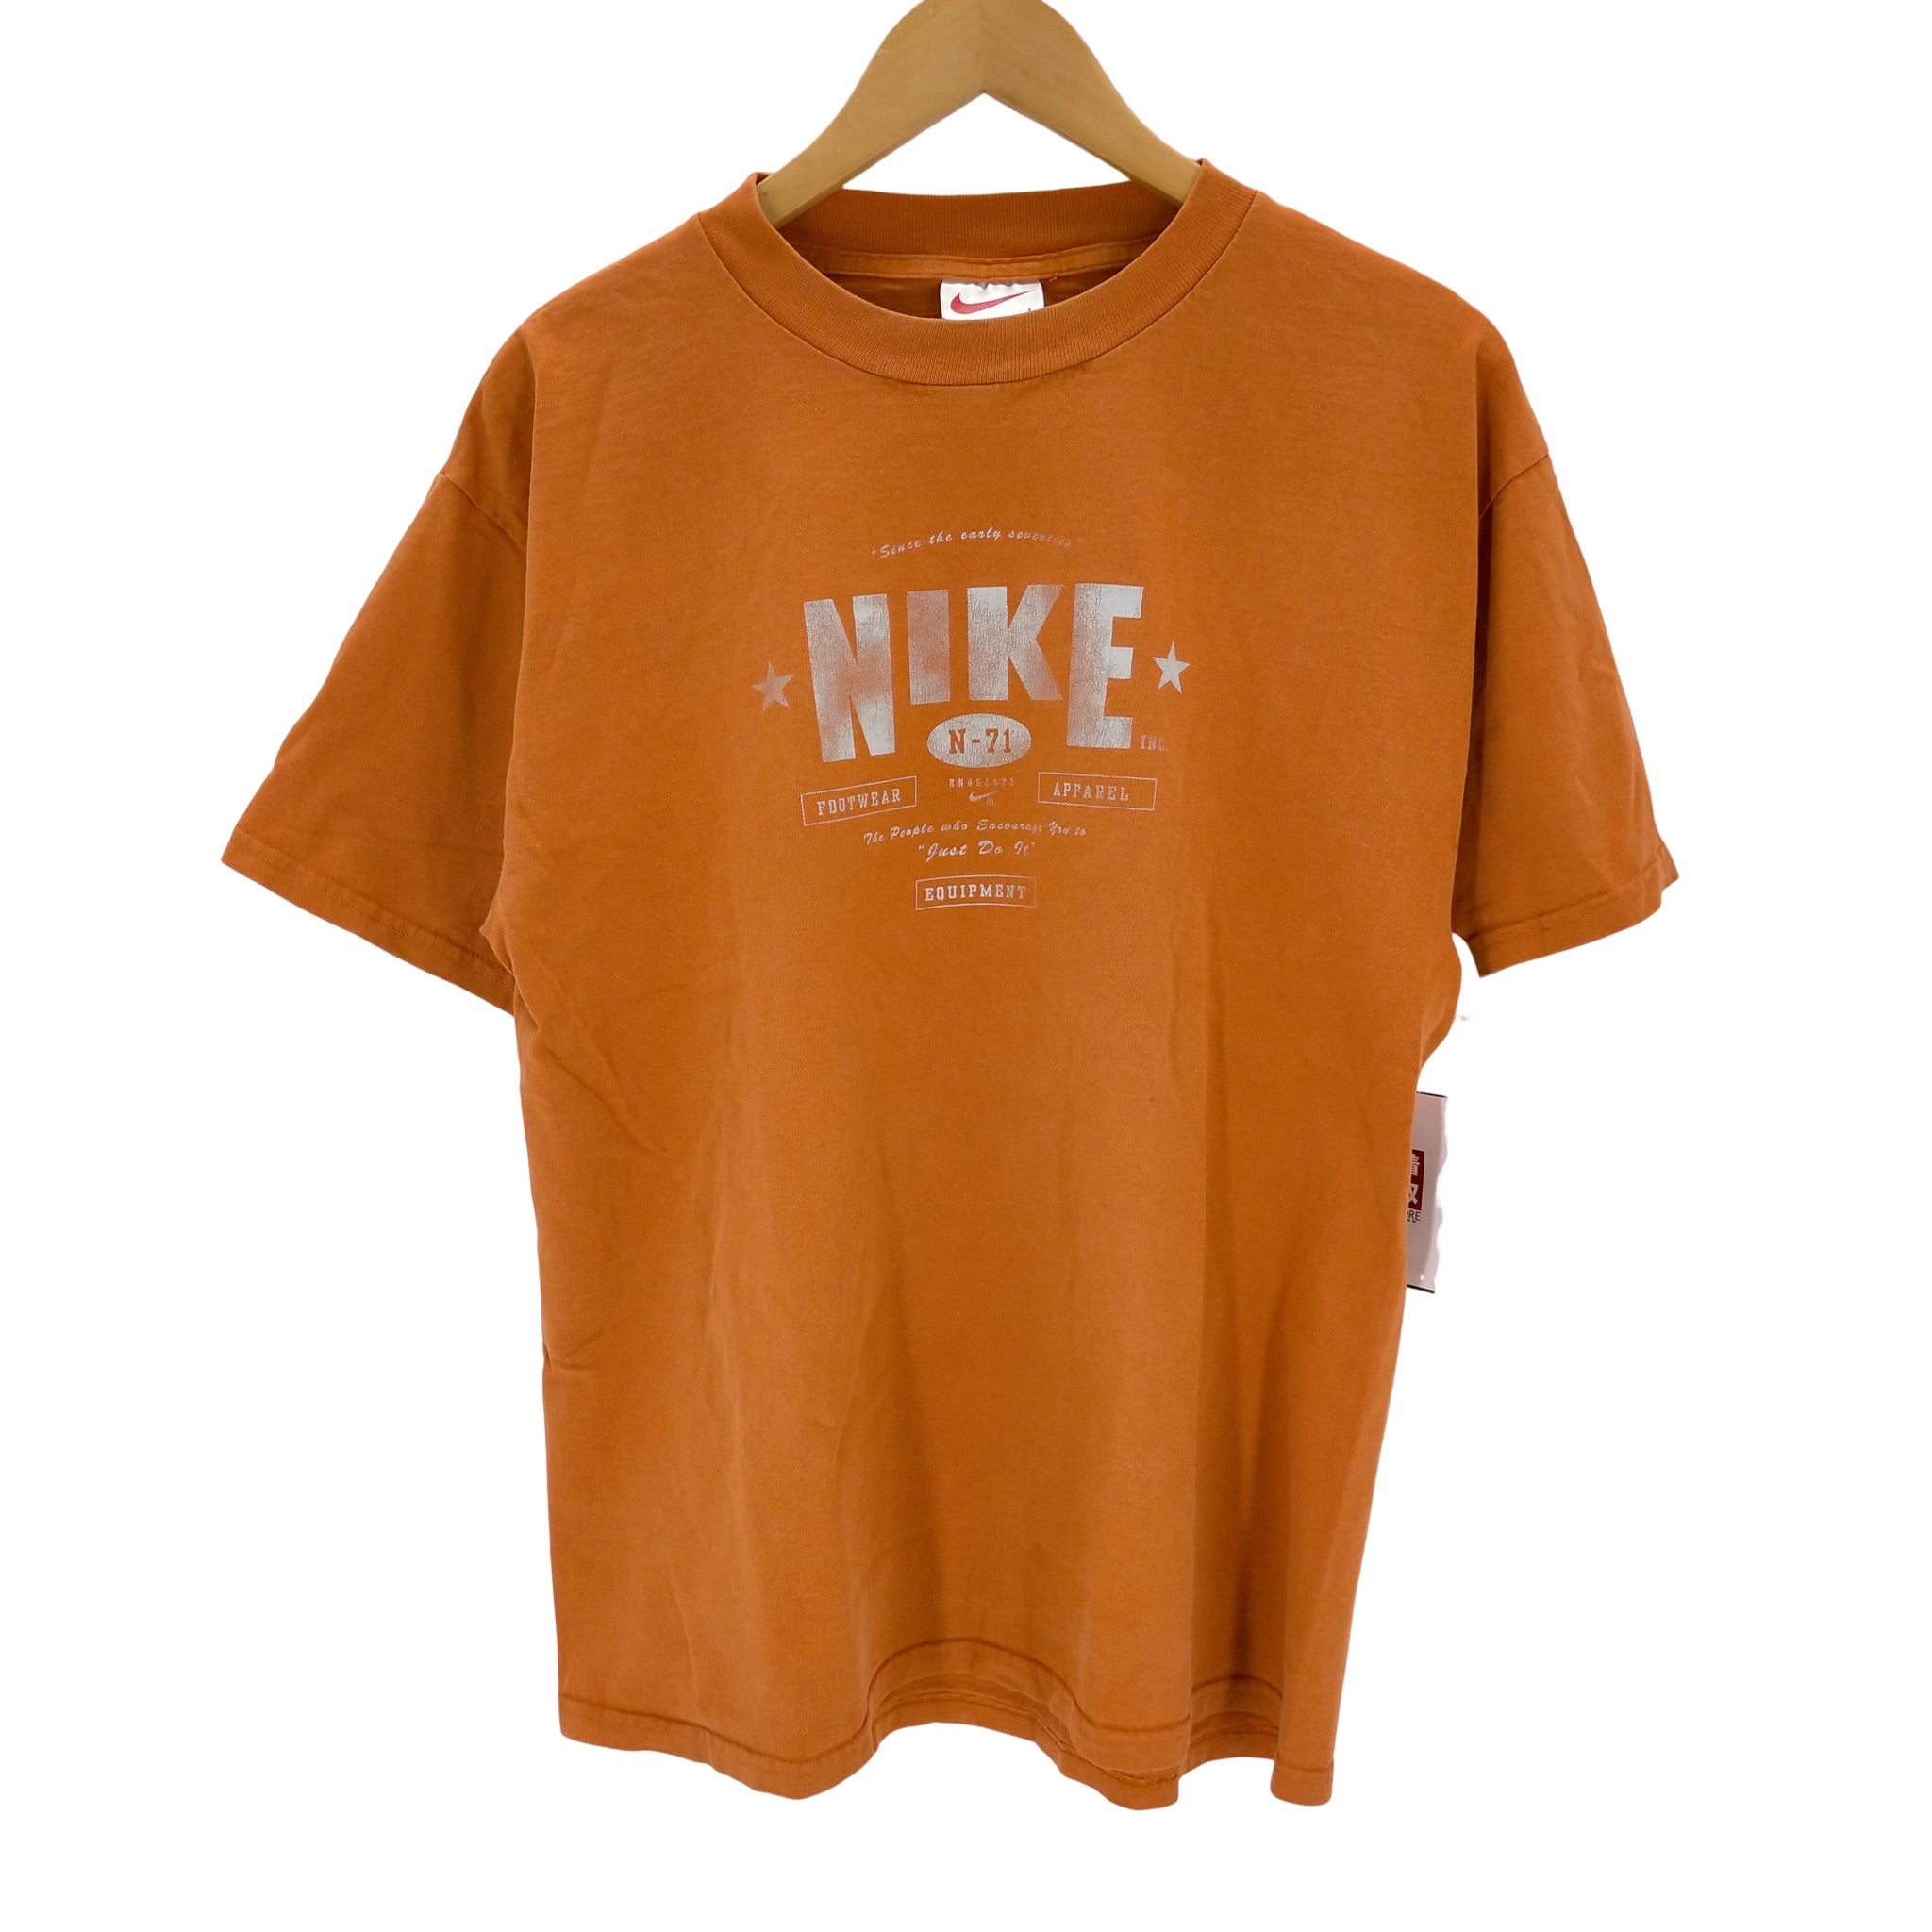 NIKE(ナイキ)90s-00s フロントプリント 半袖カットソー